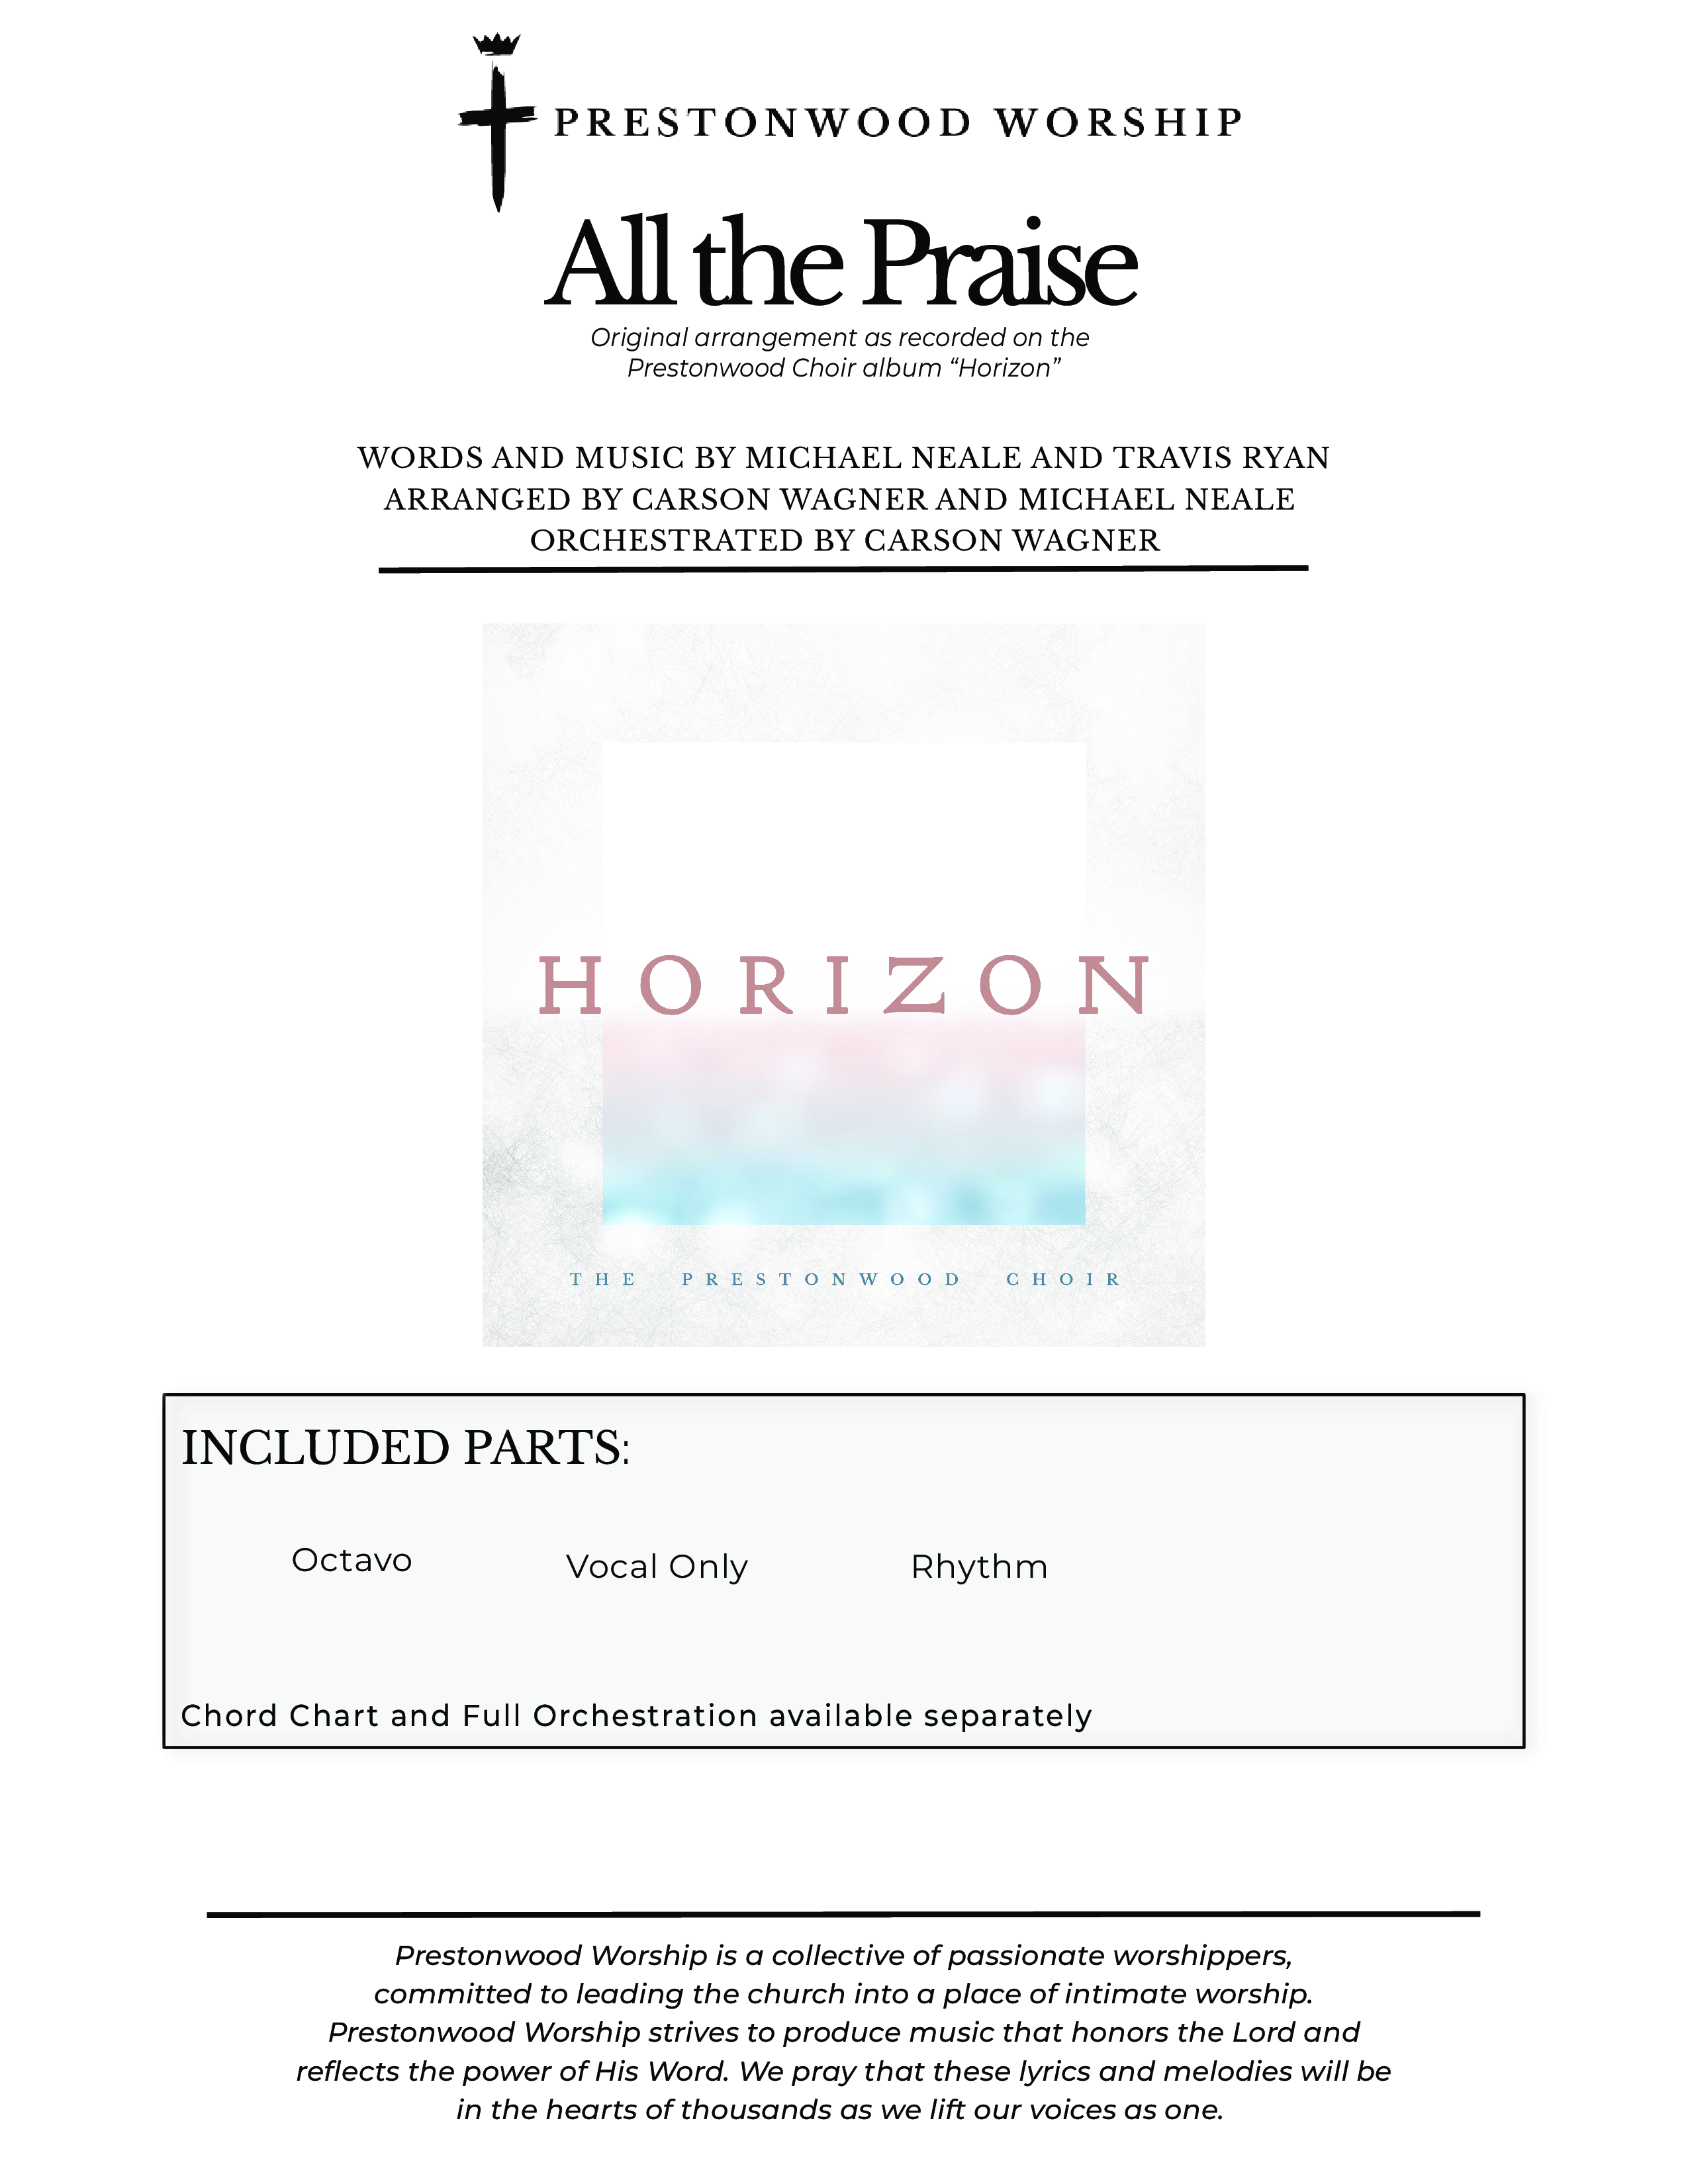 All The Praise (Choral Anthem SATB) Cover Sheet (Prestonwood Worship / Prestonwood Choir / Arr. Michael Neale / Orch. Carson Wagner)